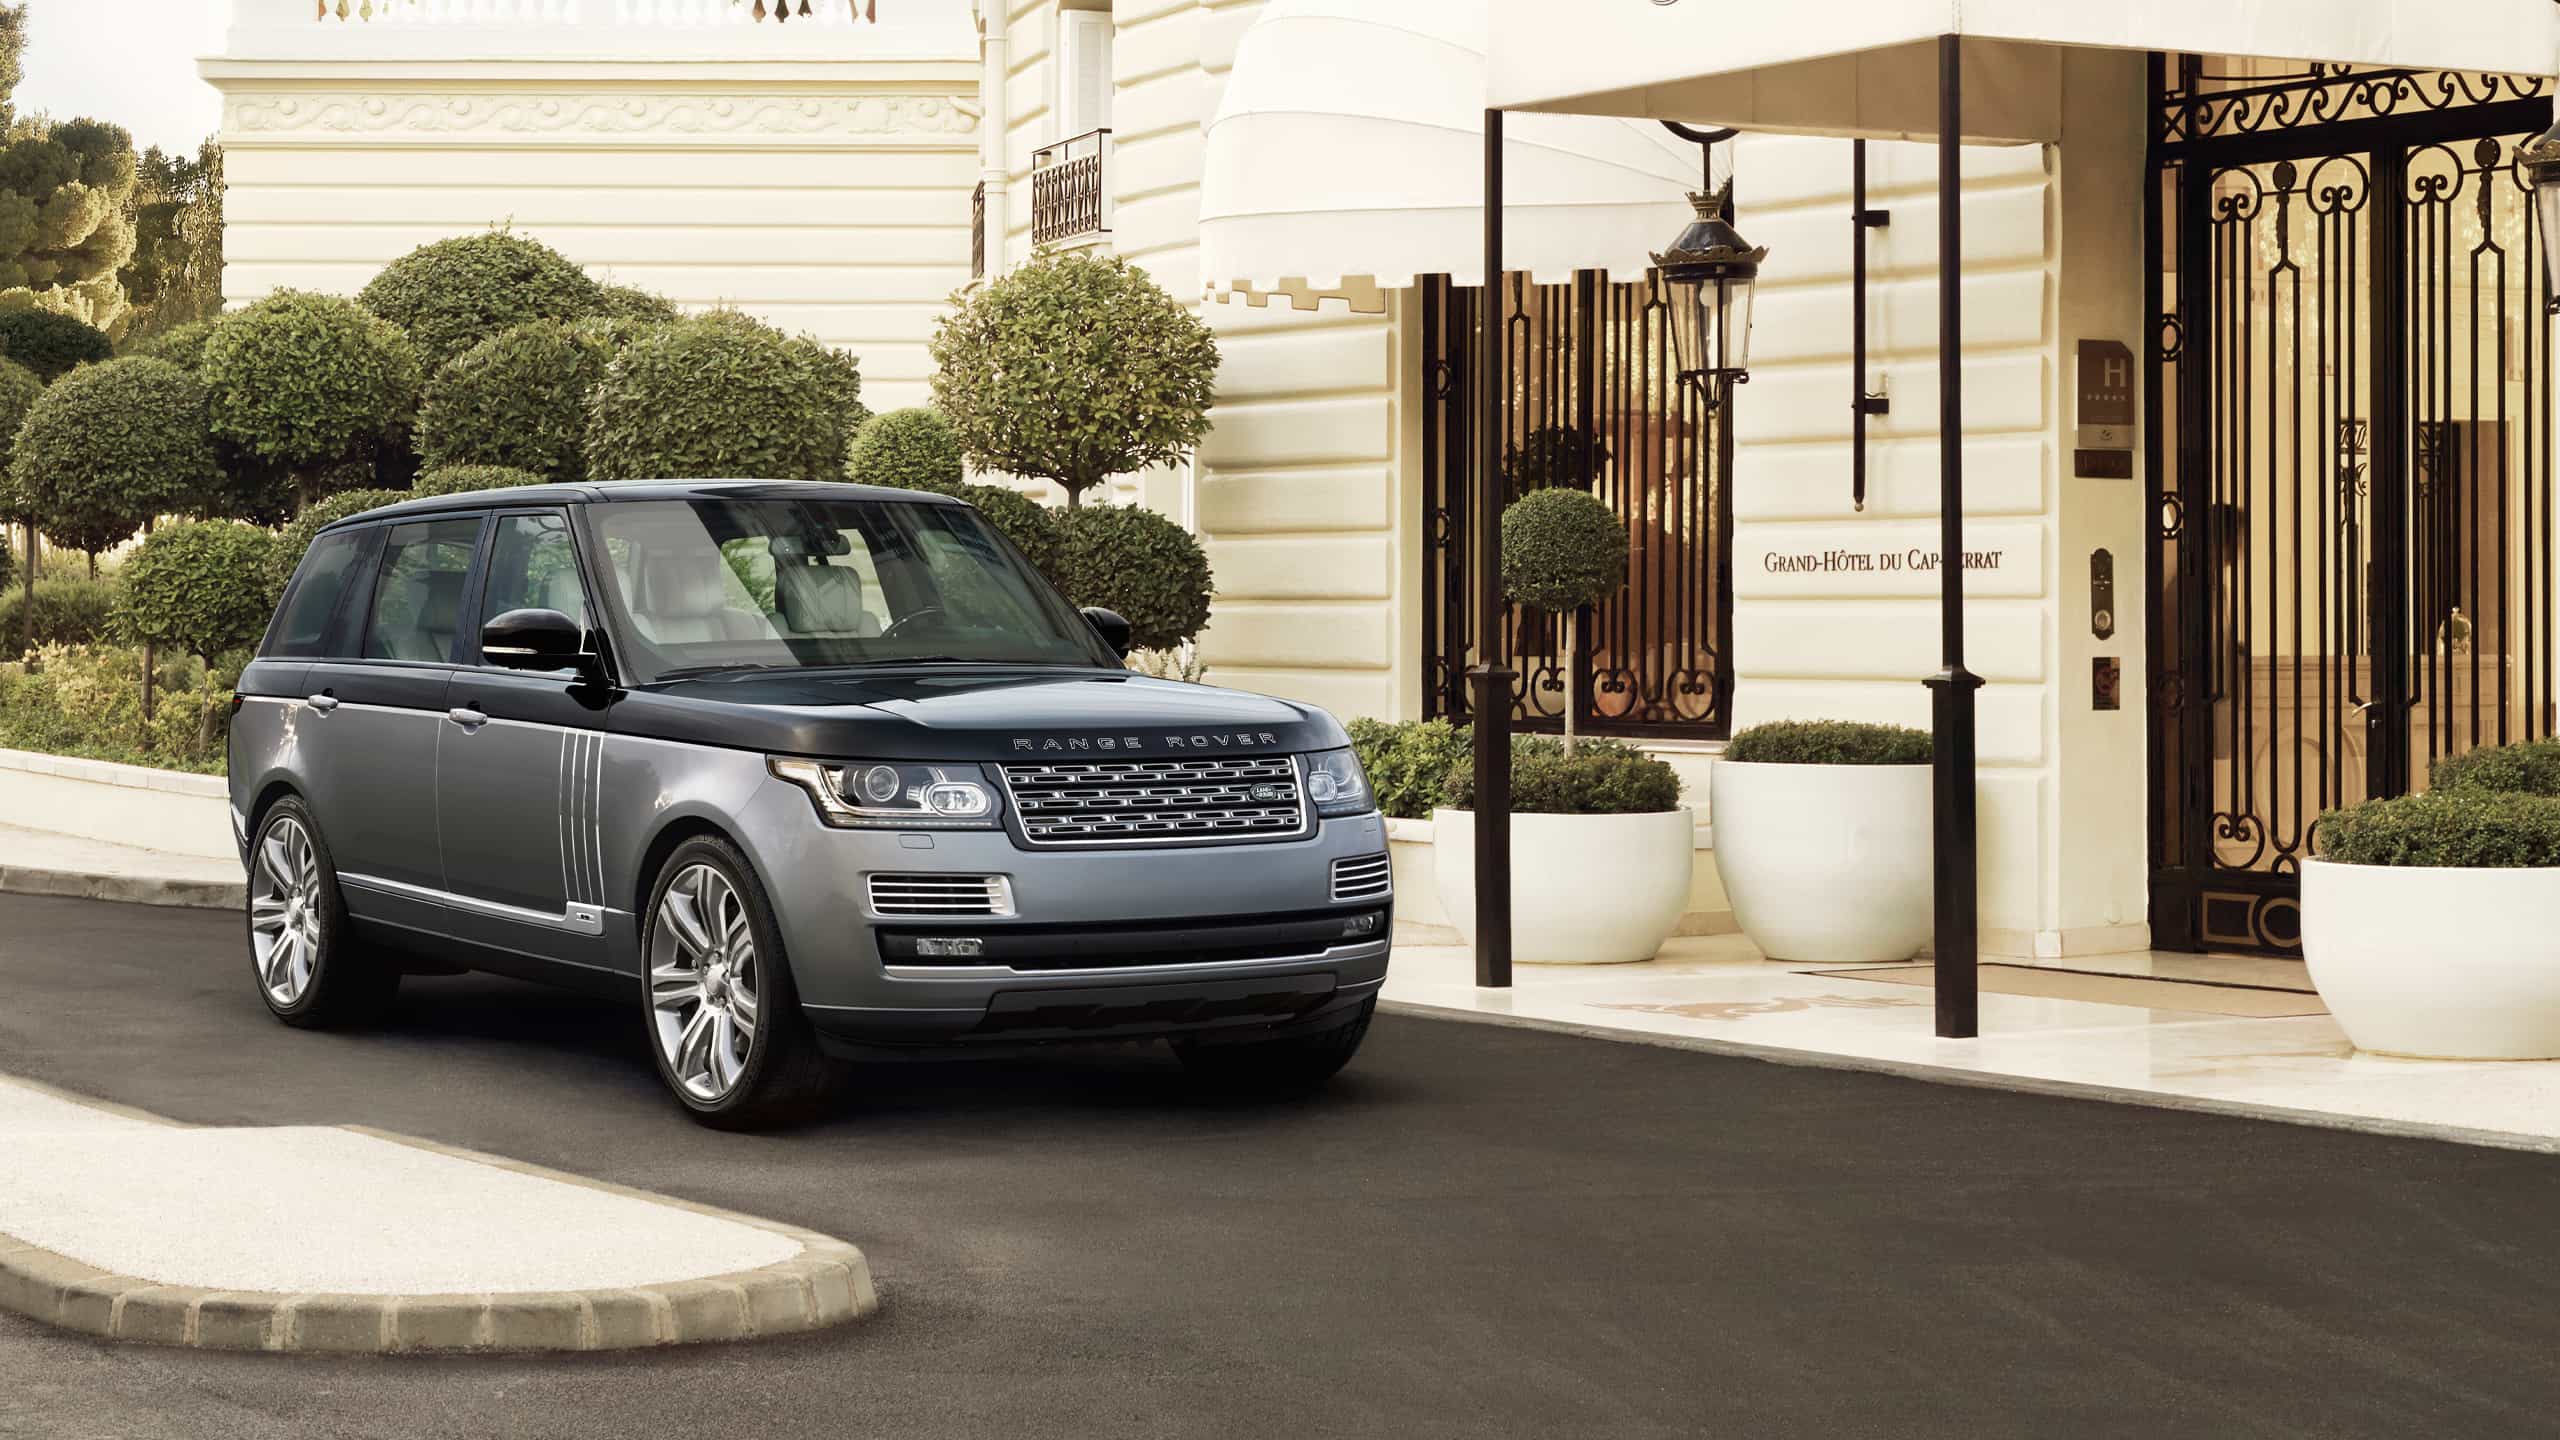 Parked Range Rover In front of villa entrance gate